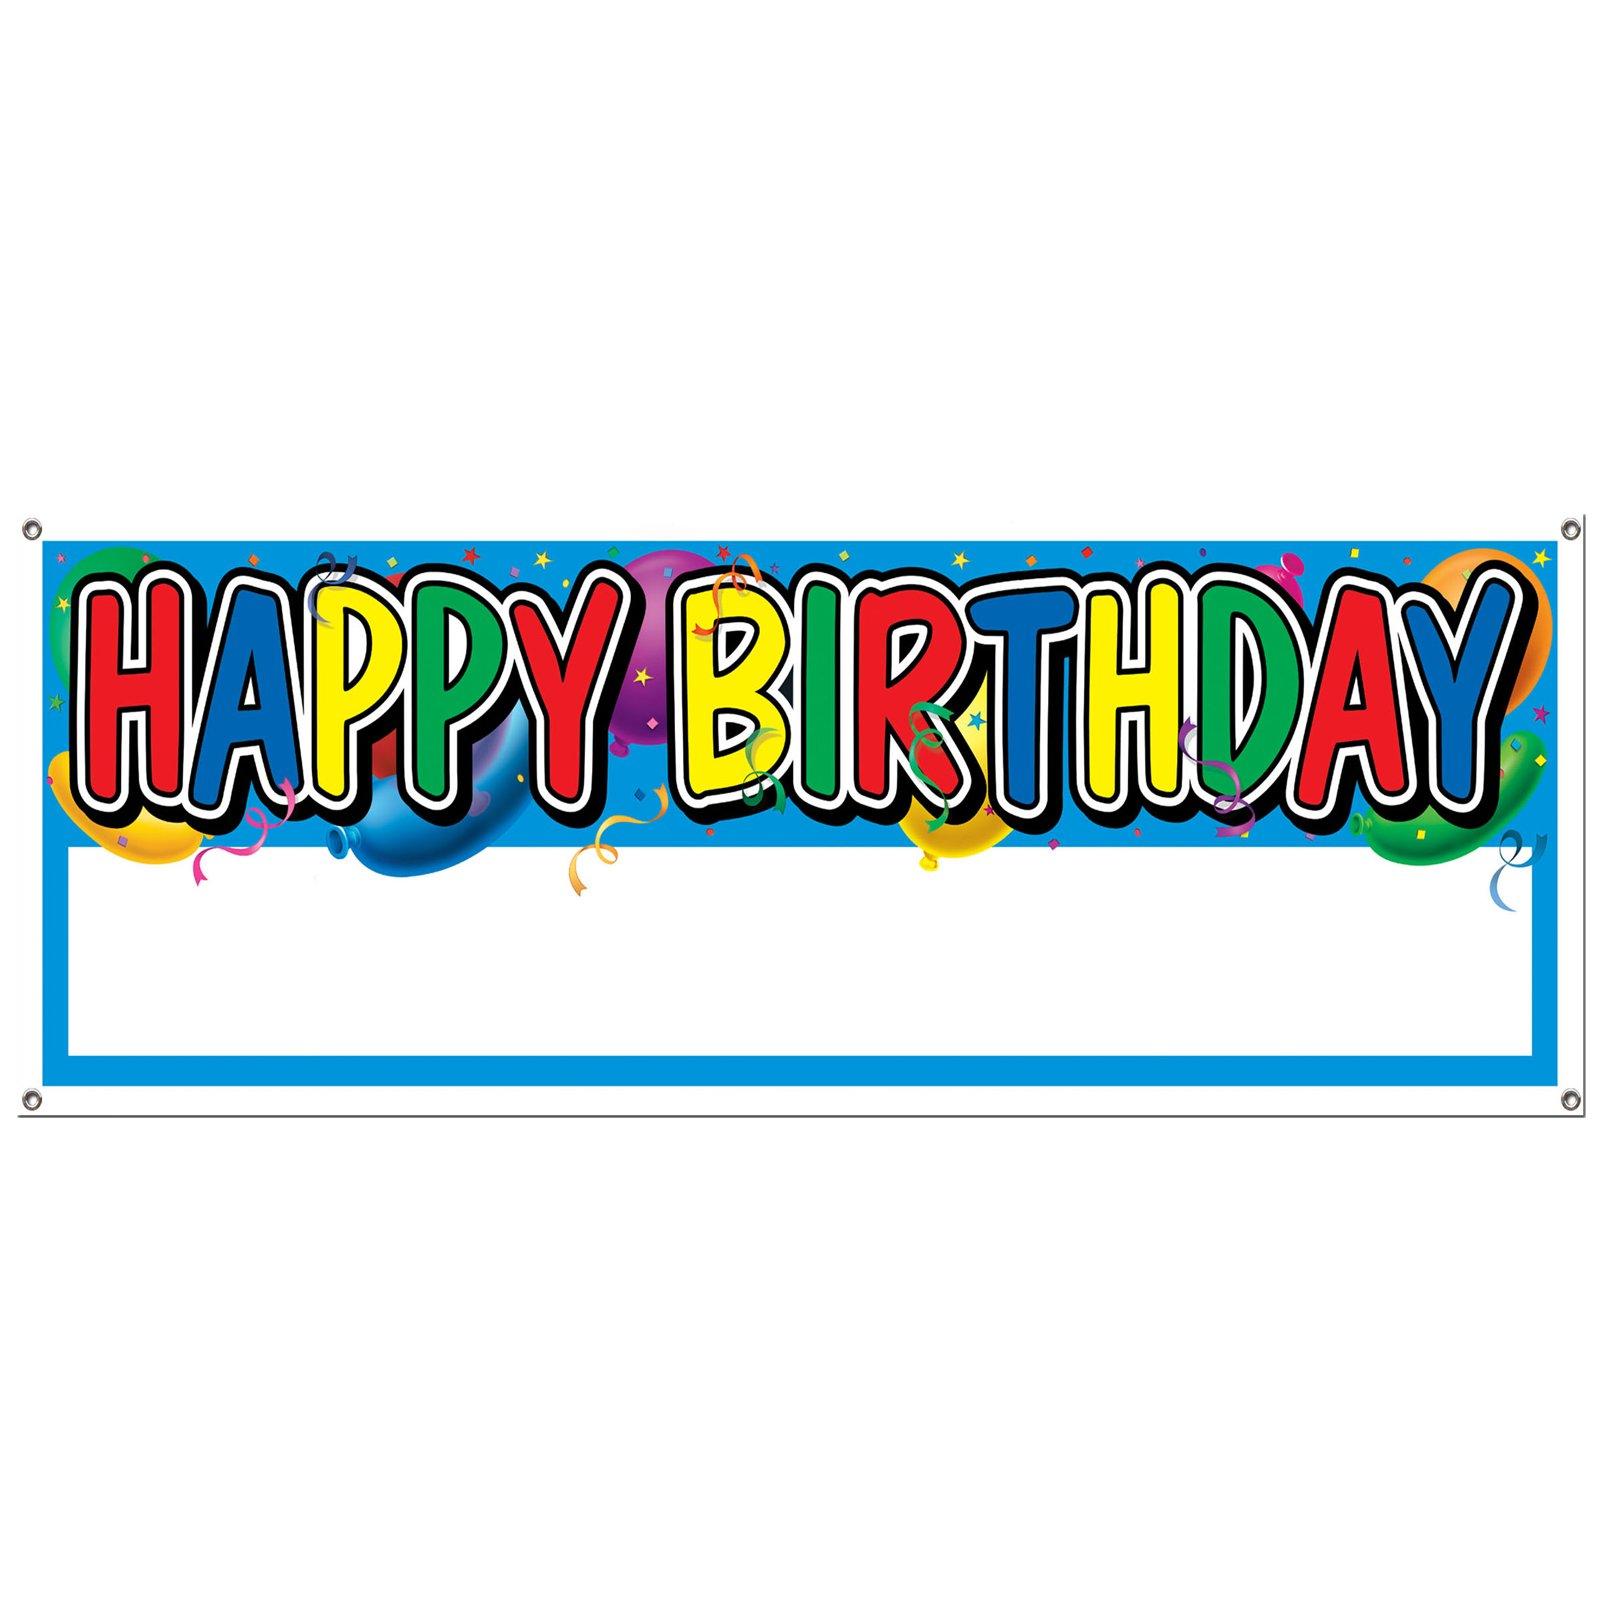 Free Happy Birthday Sign Download Free Happy Birthday Sign Png Images Free ClipArts On Clipart